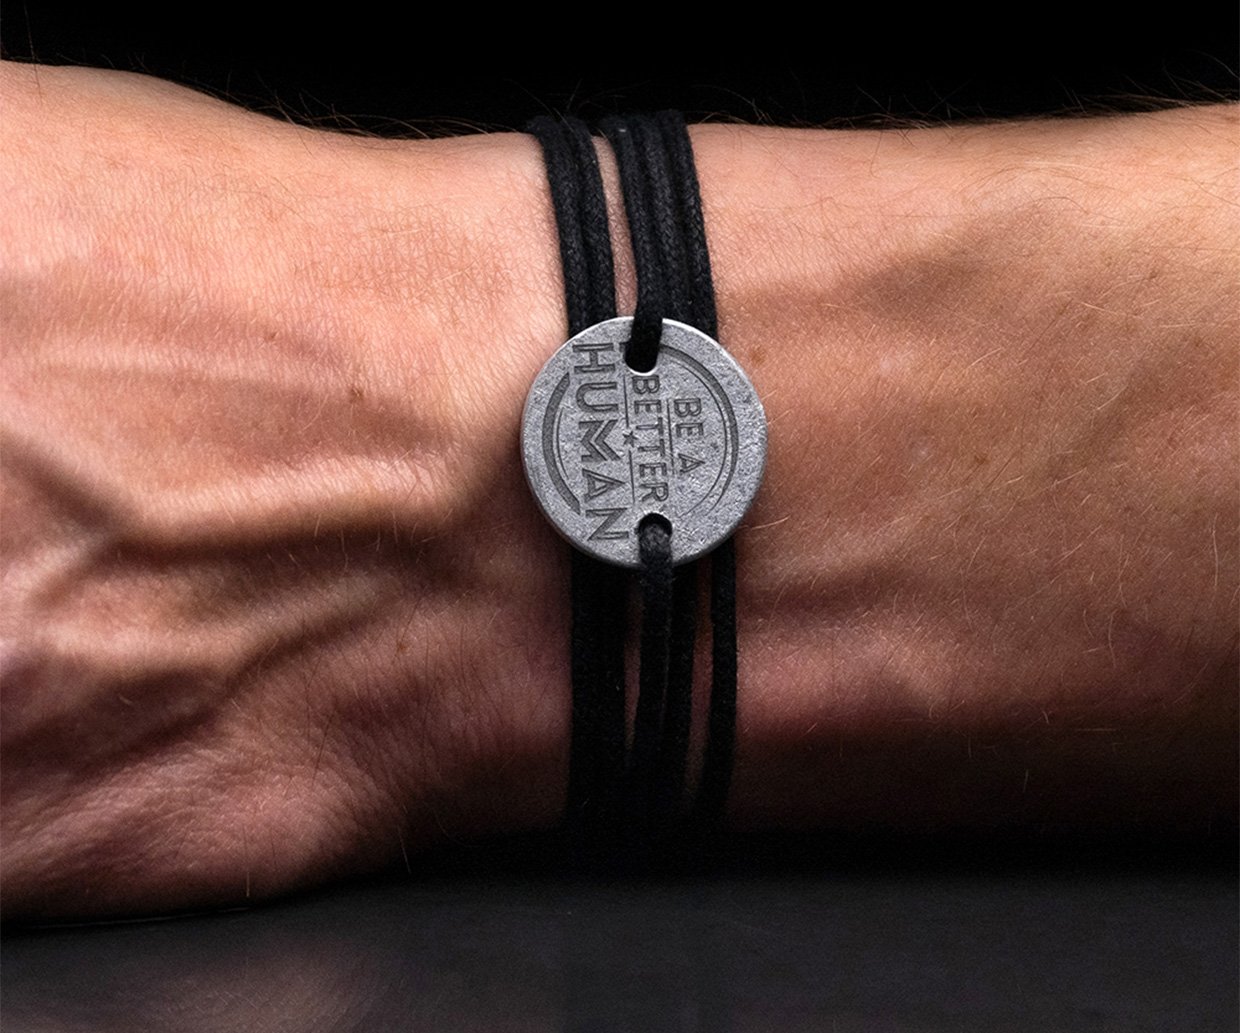 Be a Better Human Coin Wrap Bracelet